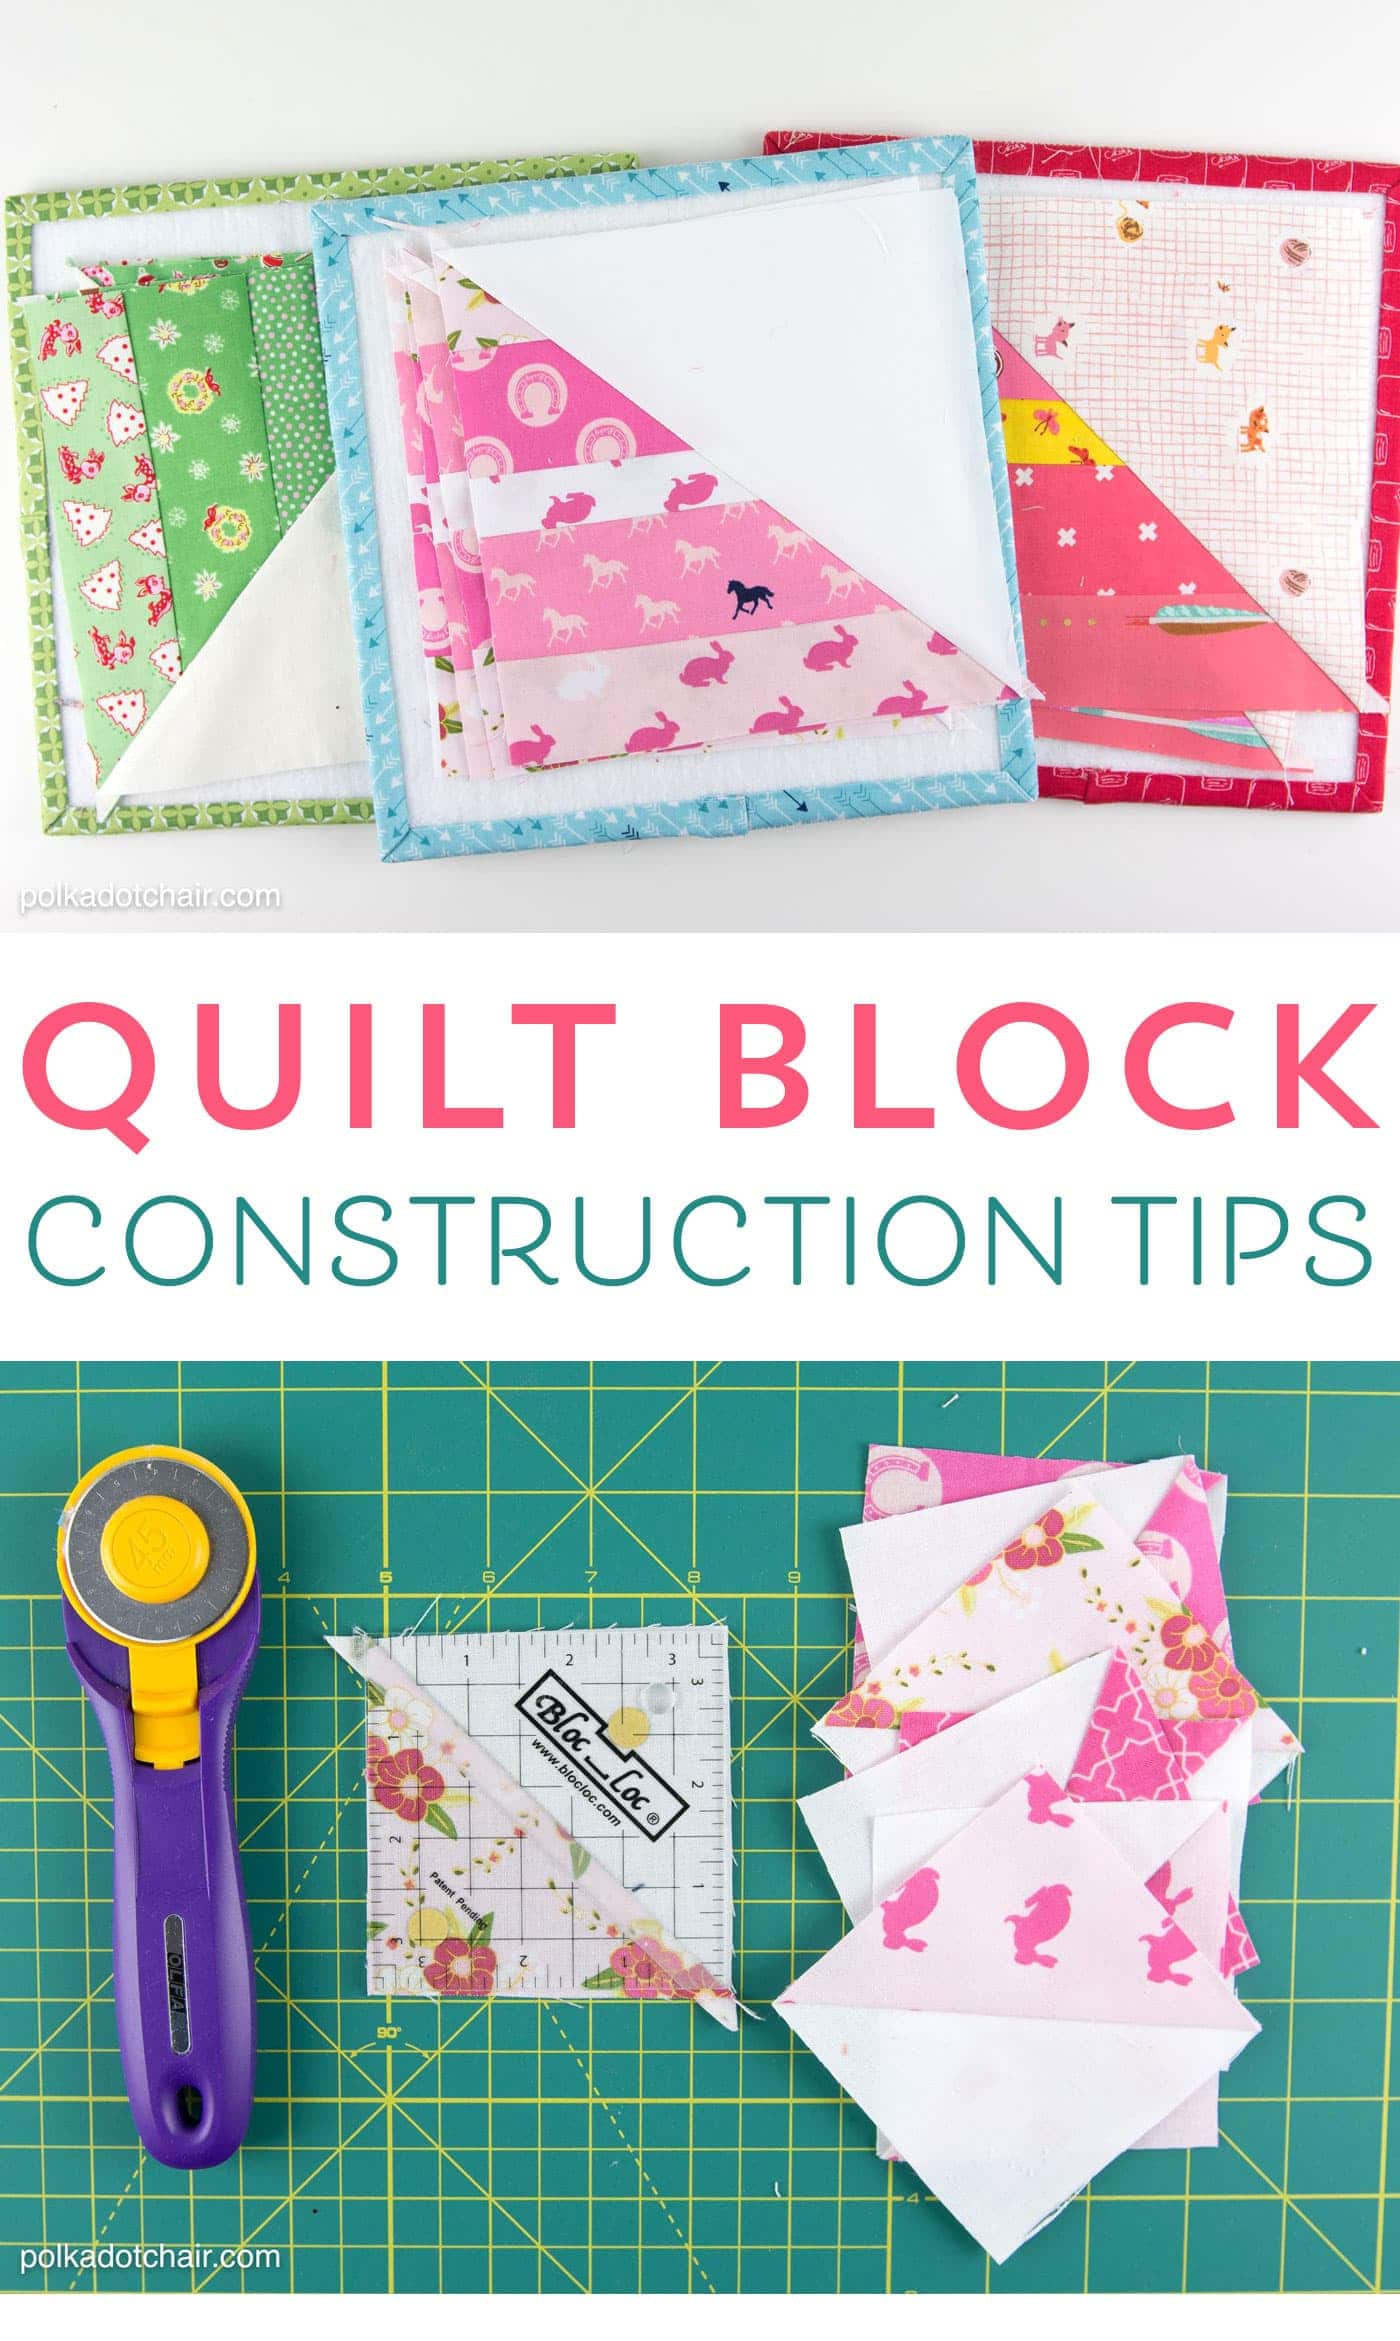 quilt-block-construction-tips-the-polka-dot-chair